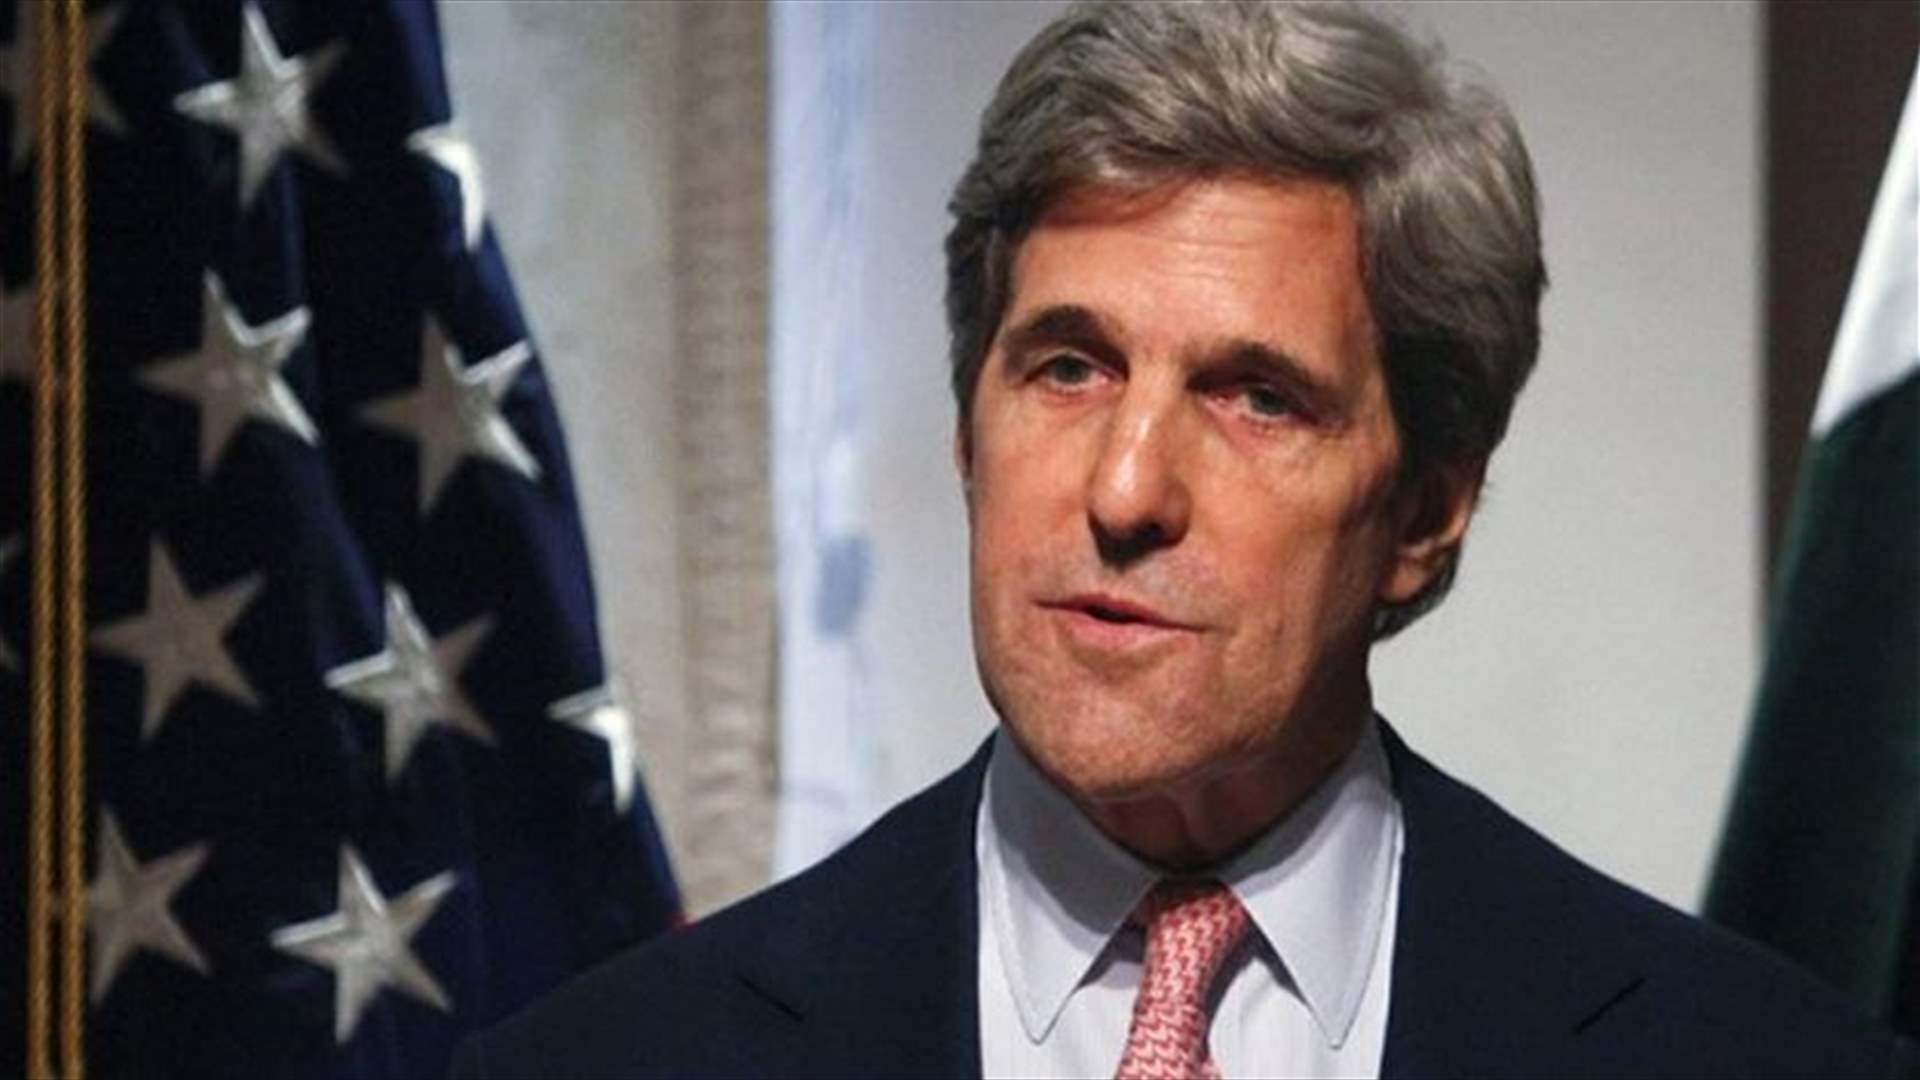 Kerry seeks to reassure European banks on Iran trade